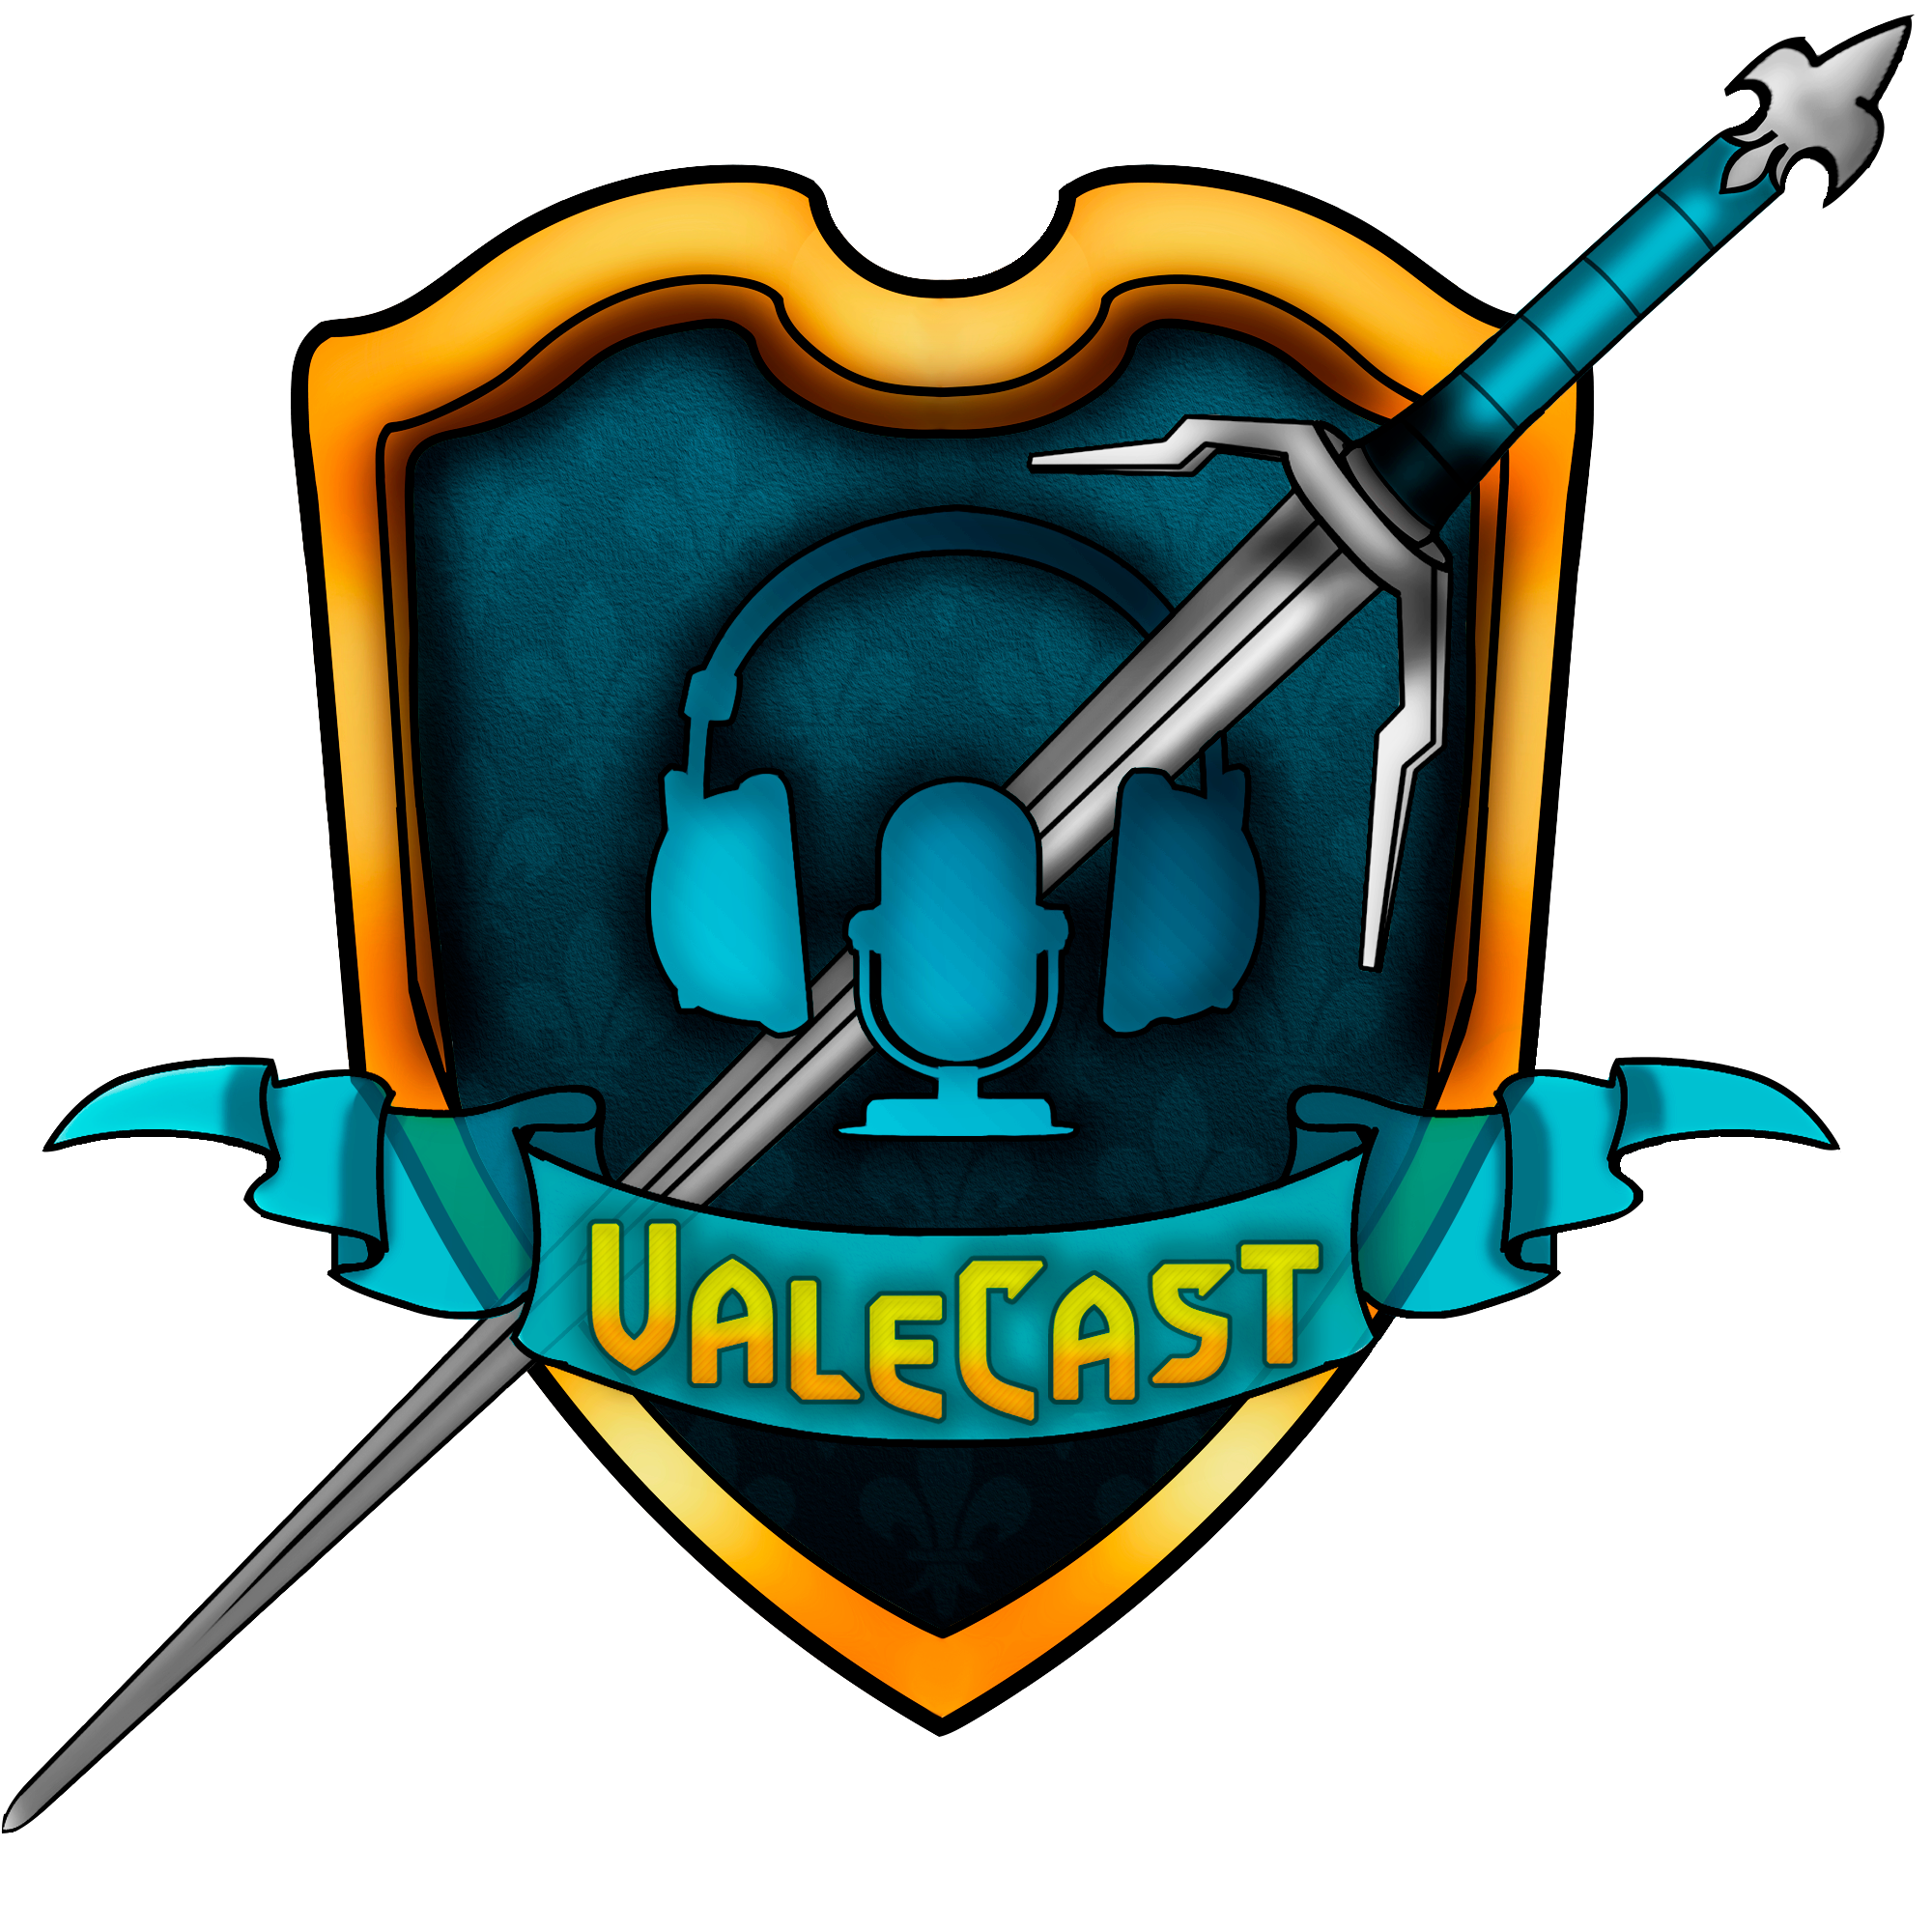 valecast